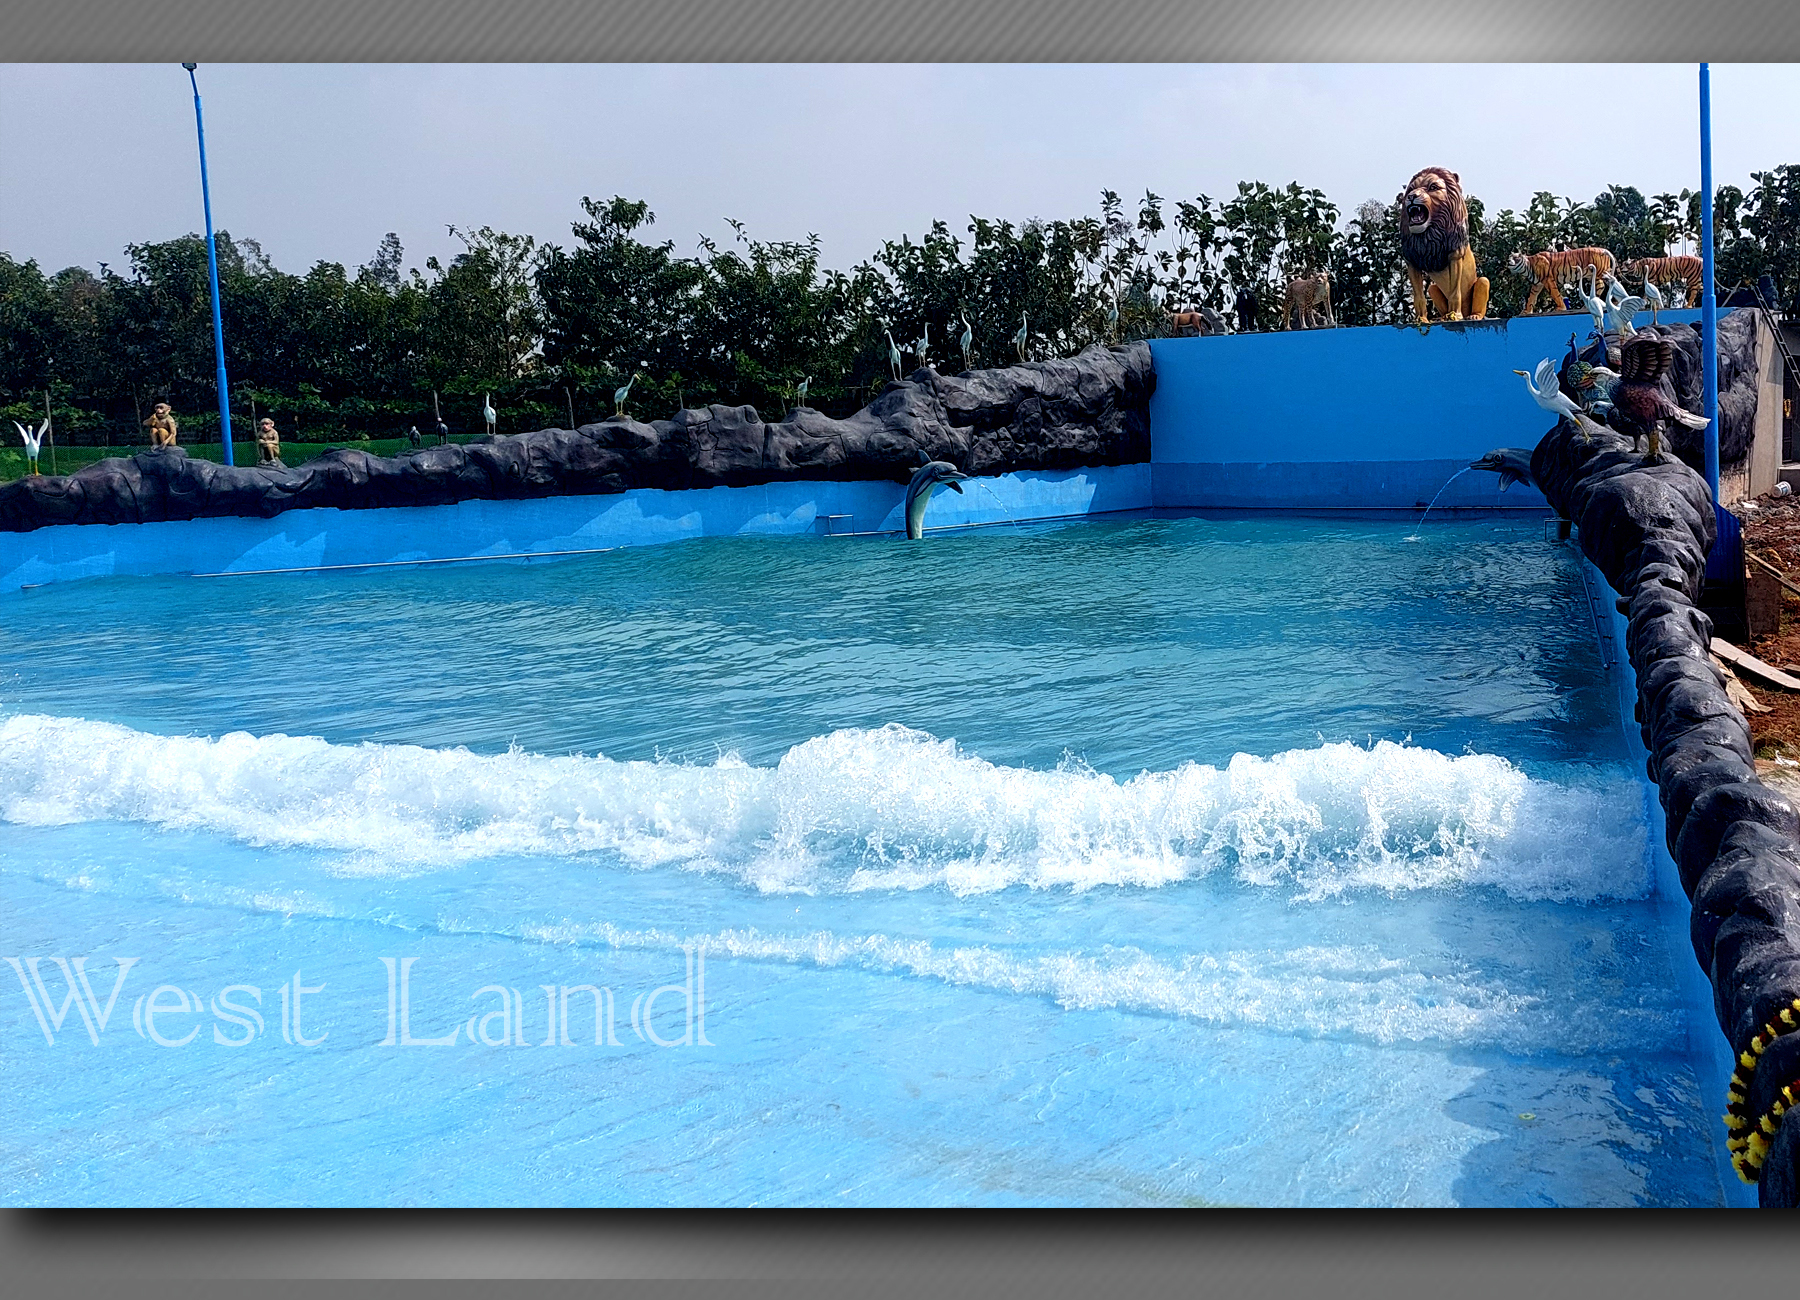 Theme Wave Water Pool